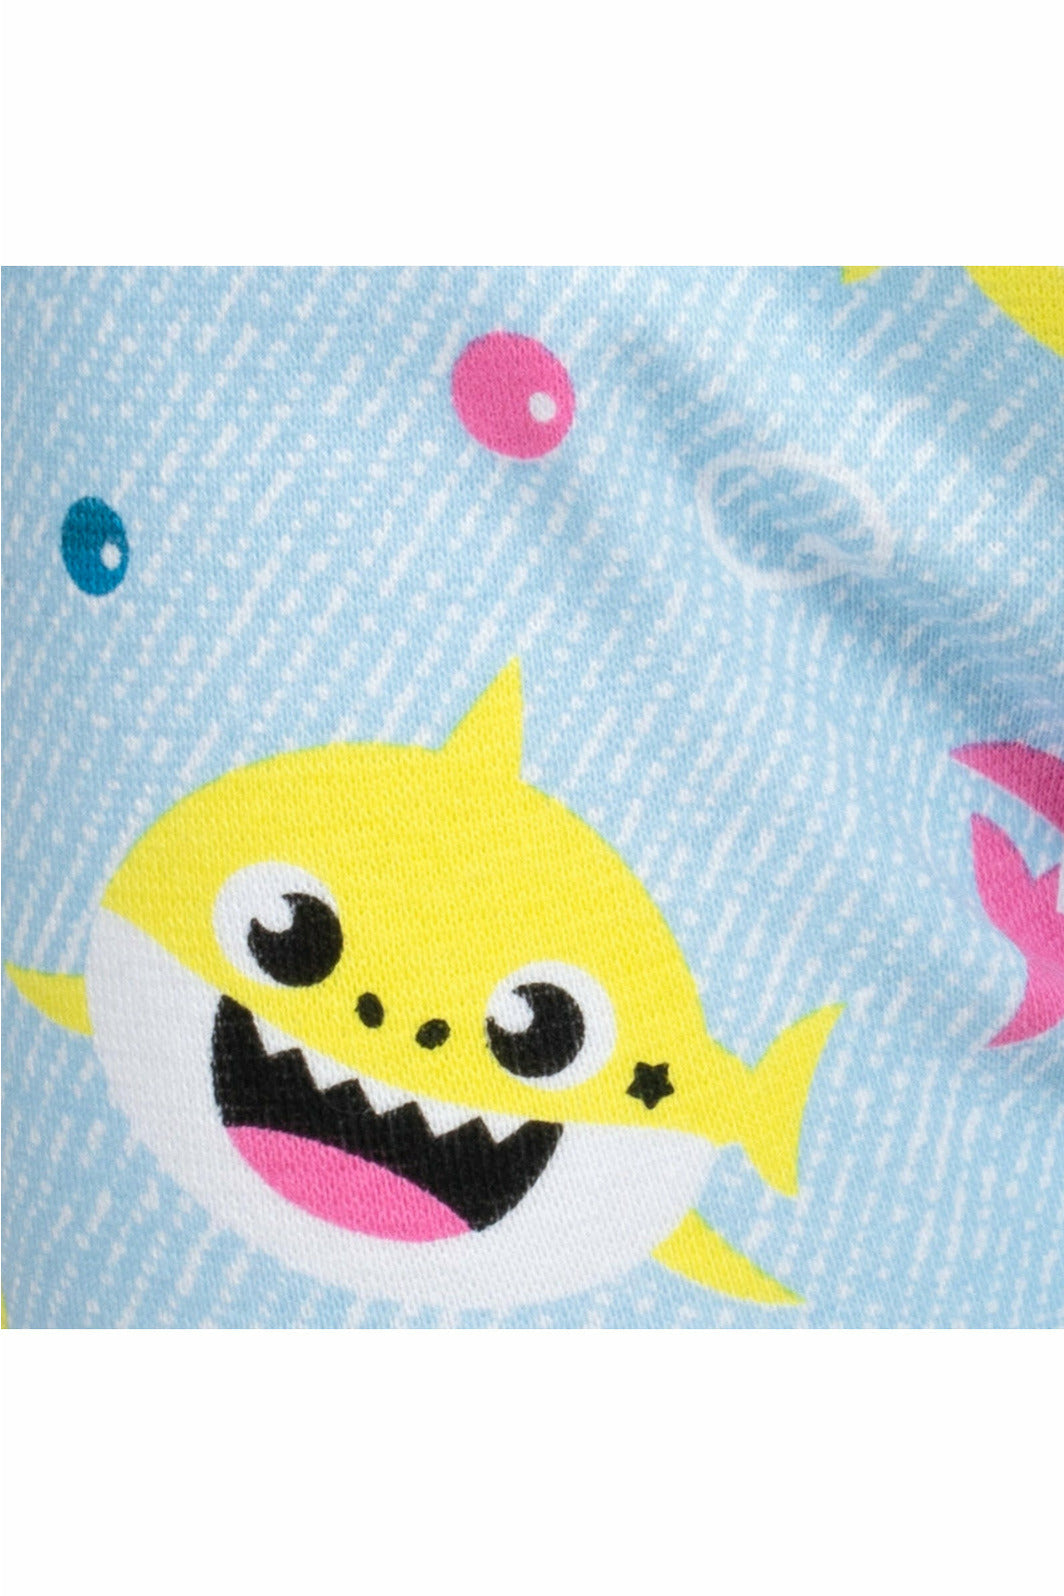 Pinkfong Baby Shark Graphic T-Shirt & Shorts